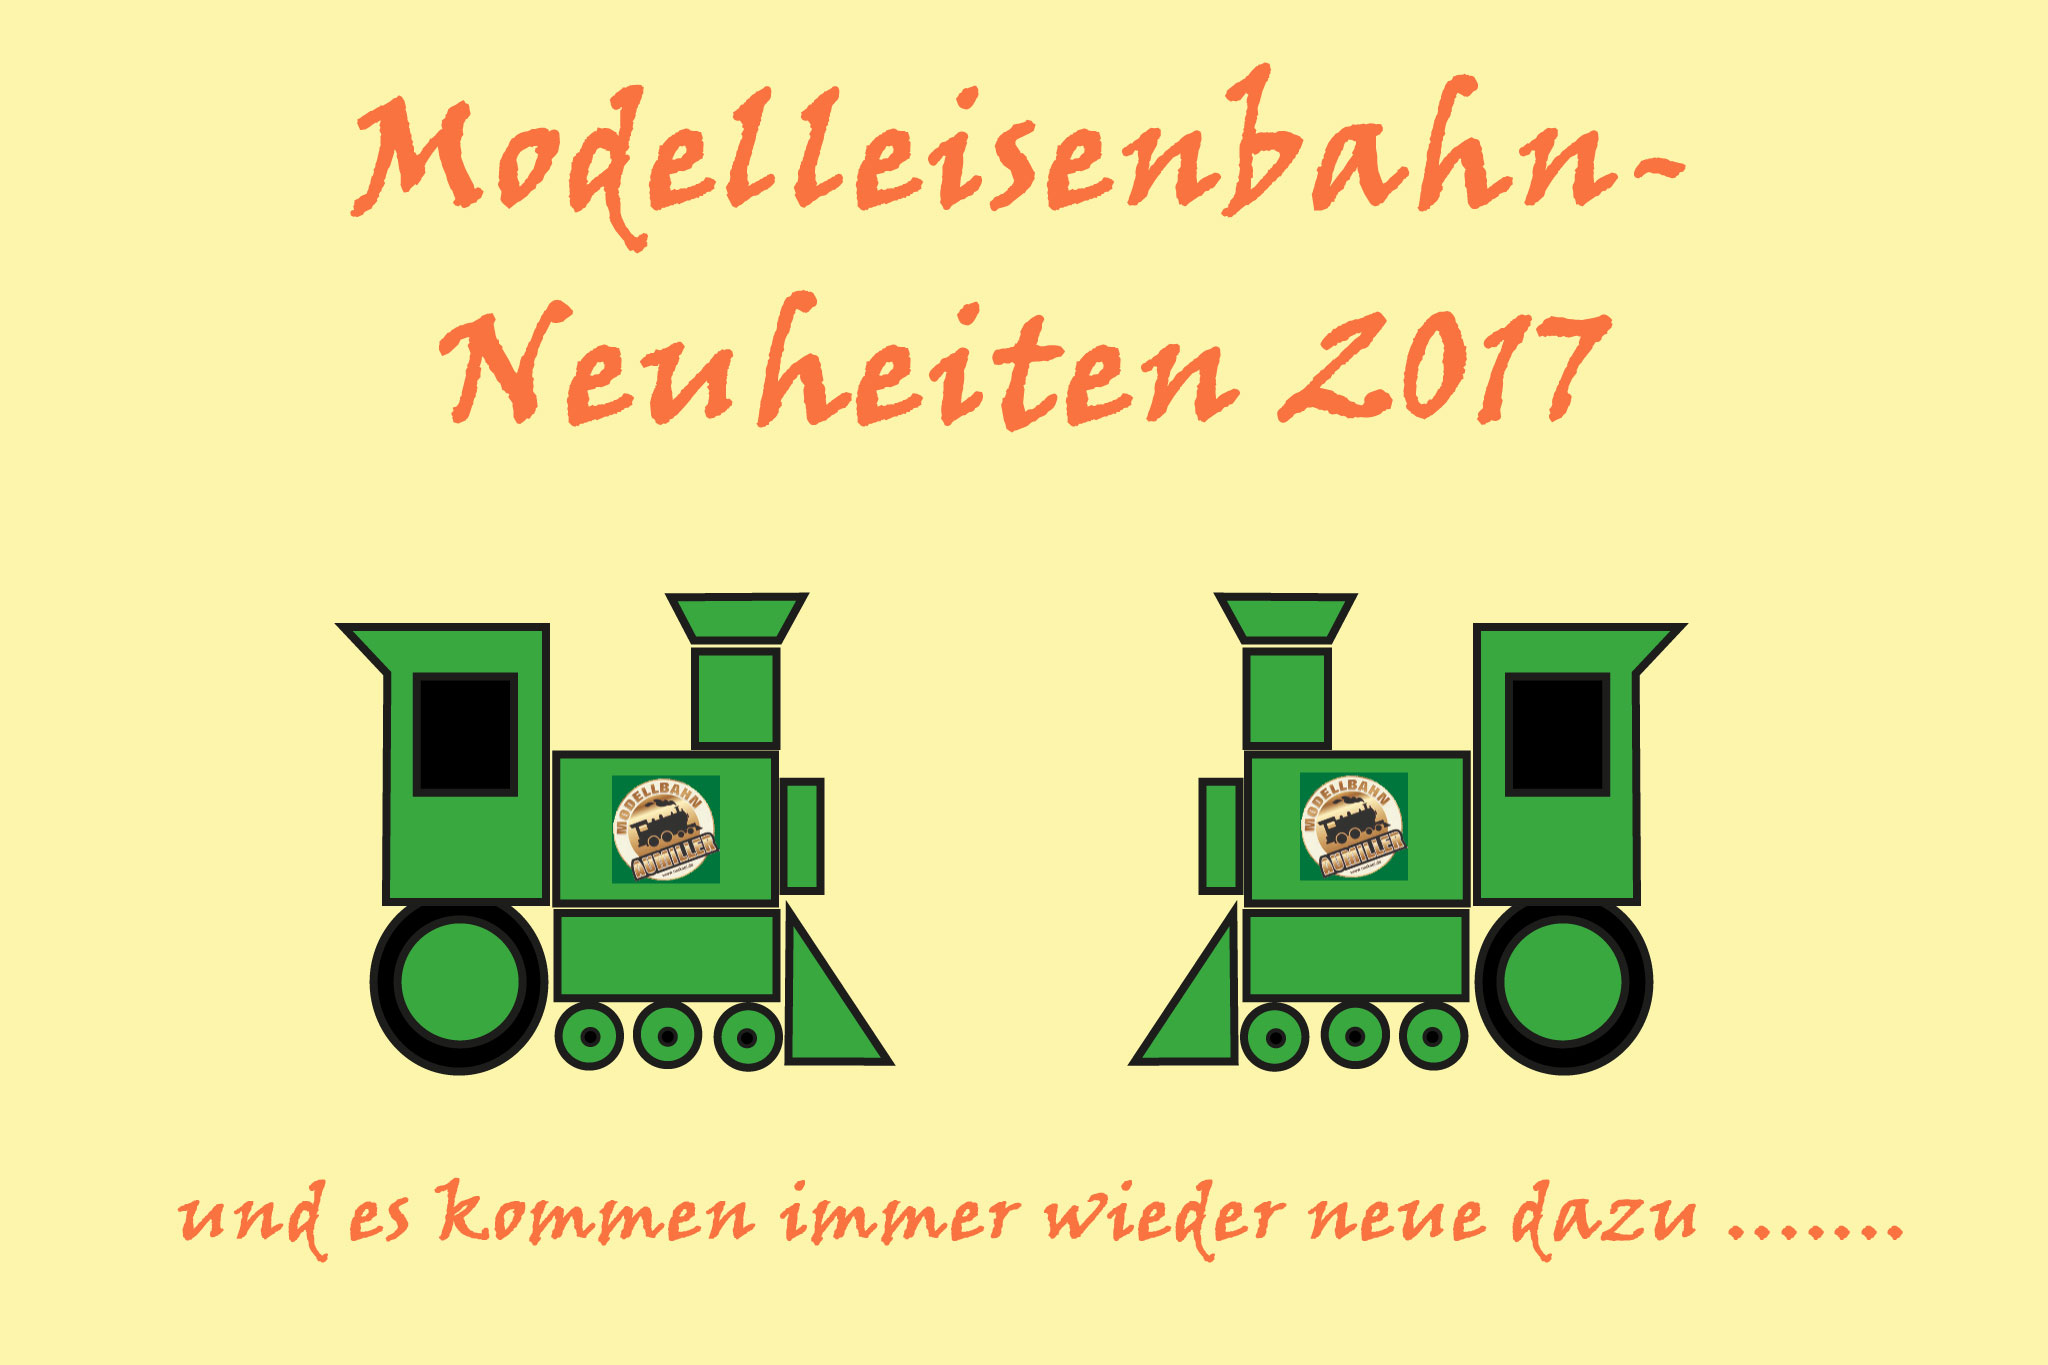 Modelleisenbahn-Neuheiten 2017 - Link zu den Neuheiten auf naskapi.de